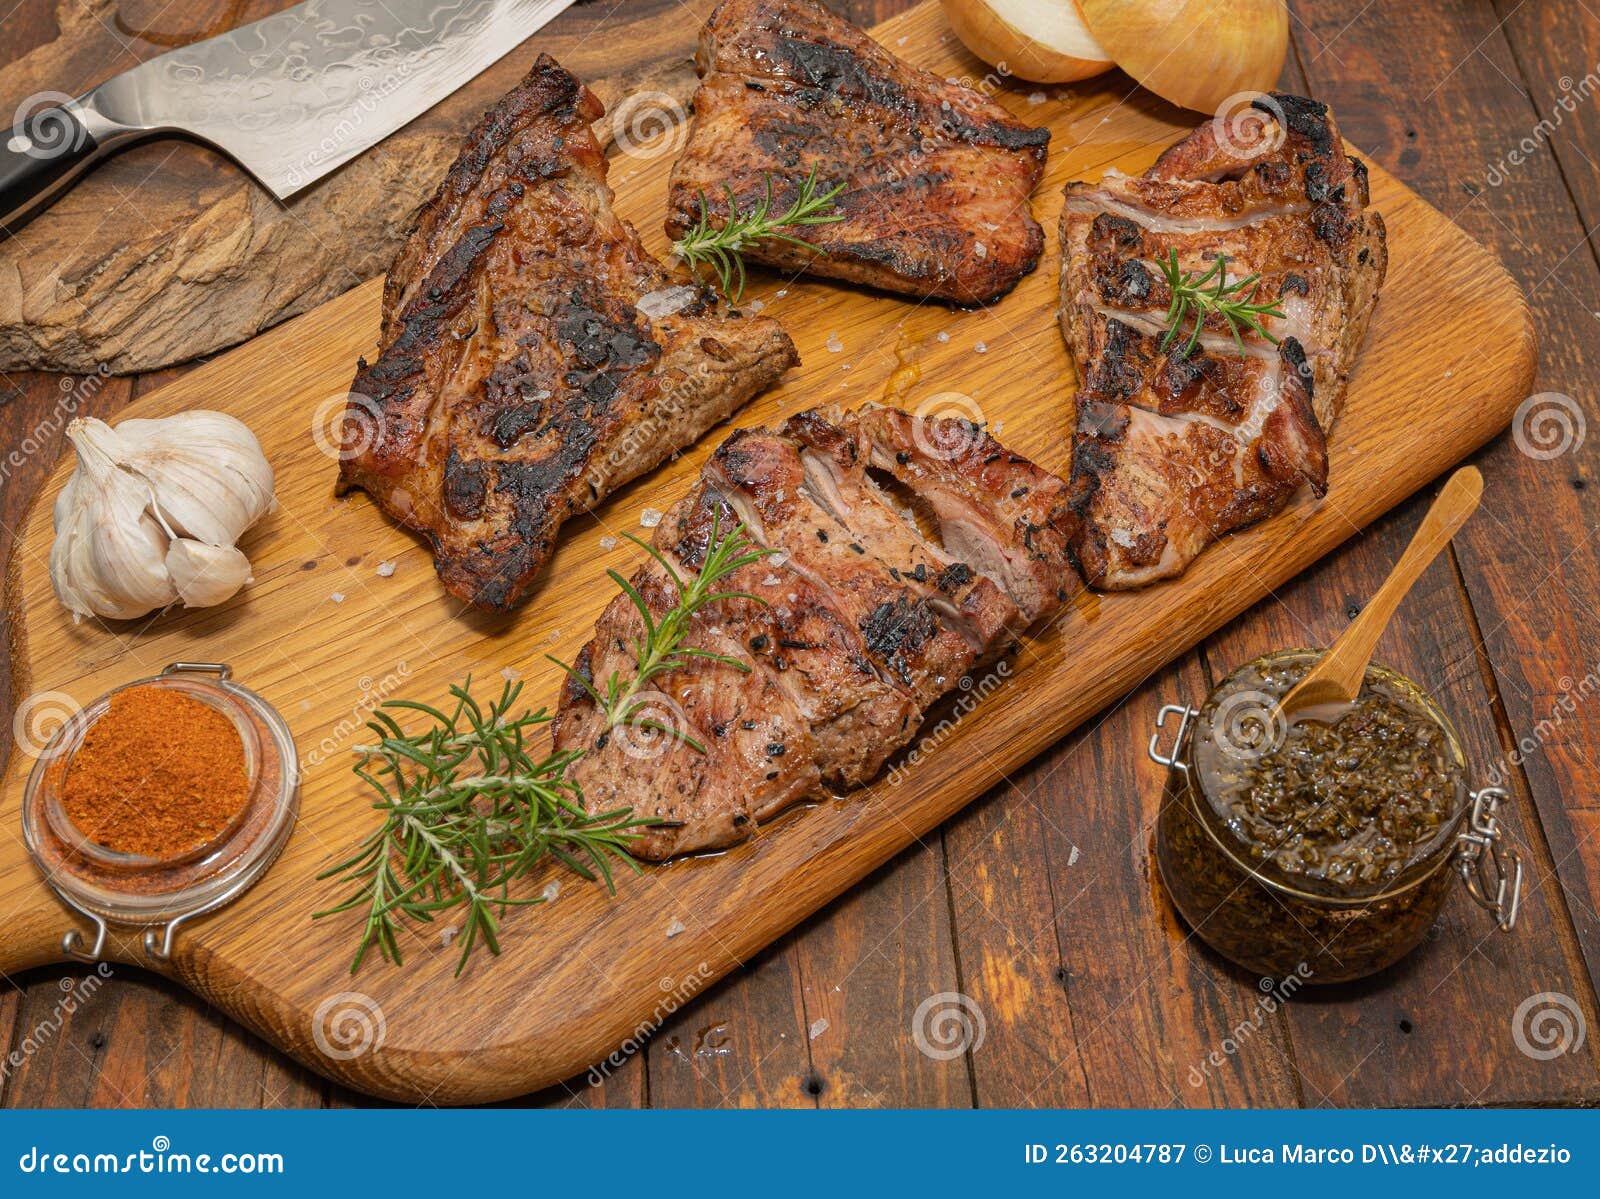 close up of freshly cooked pork secreto iberico with chimichurri